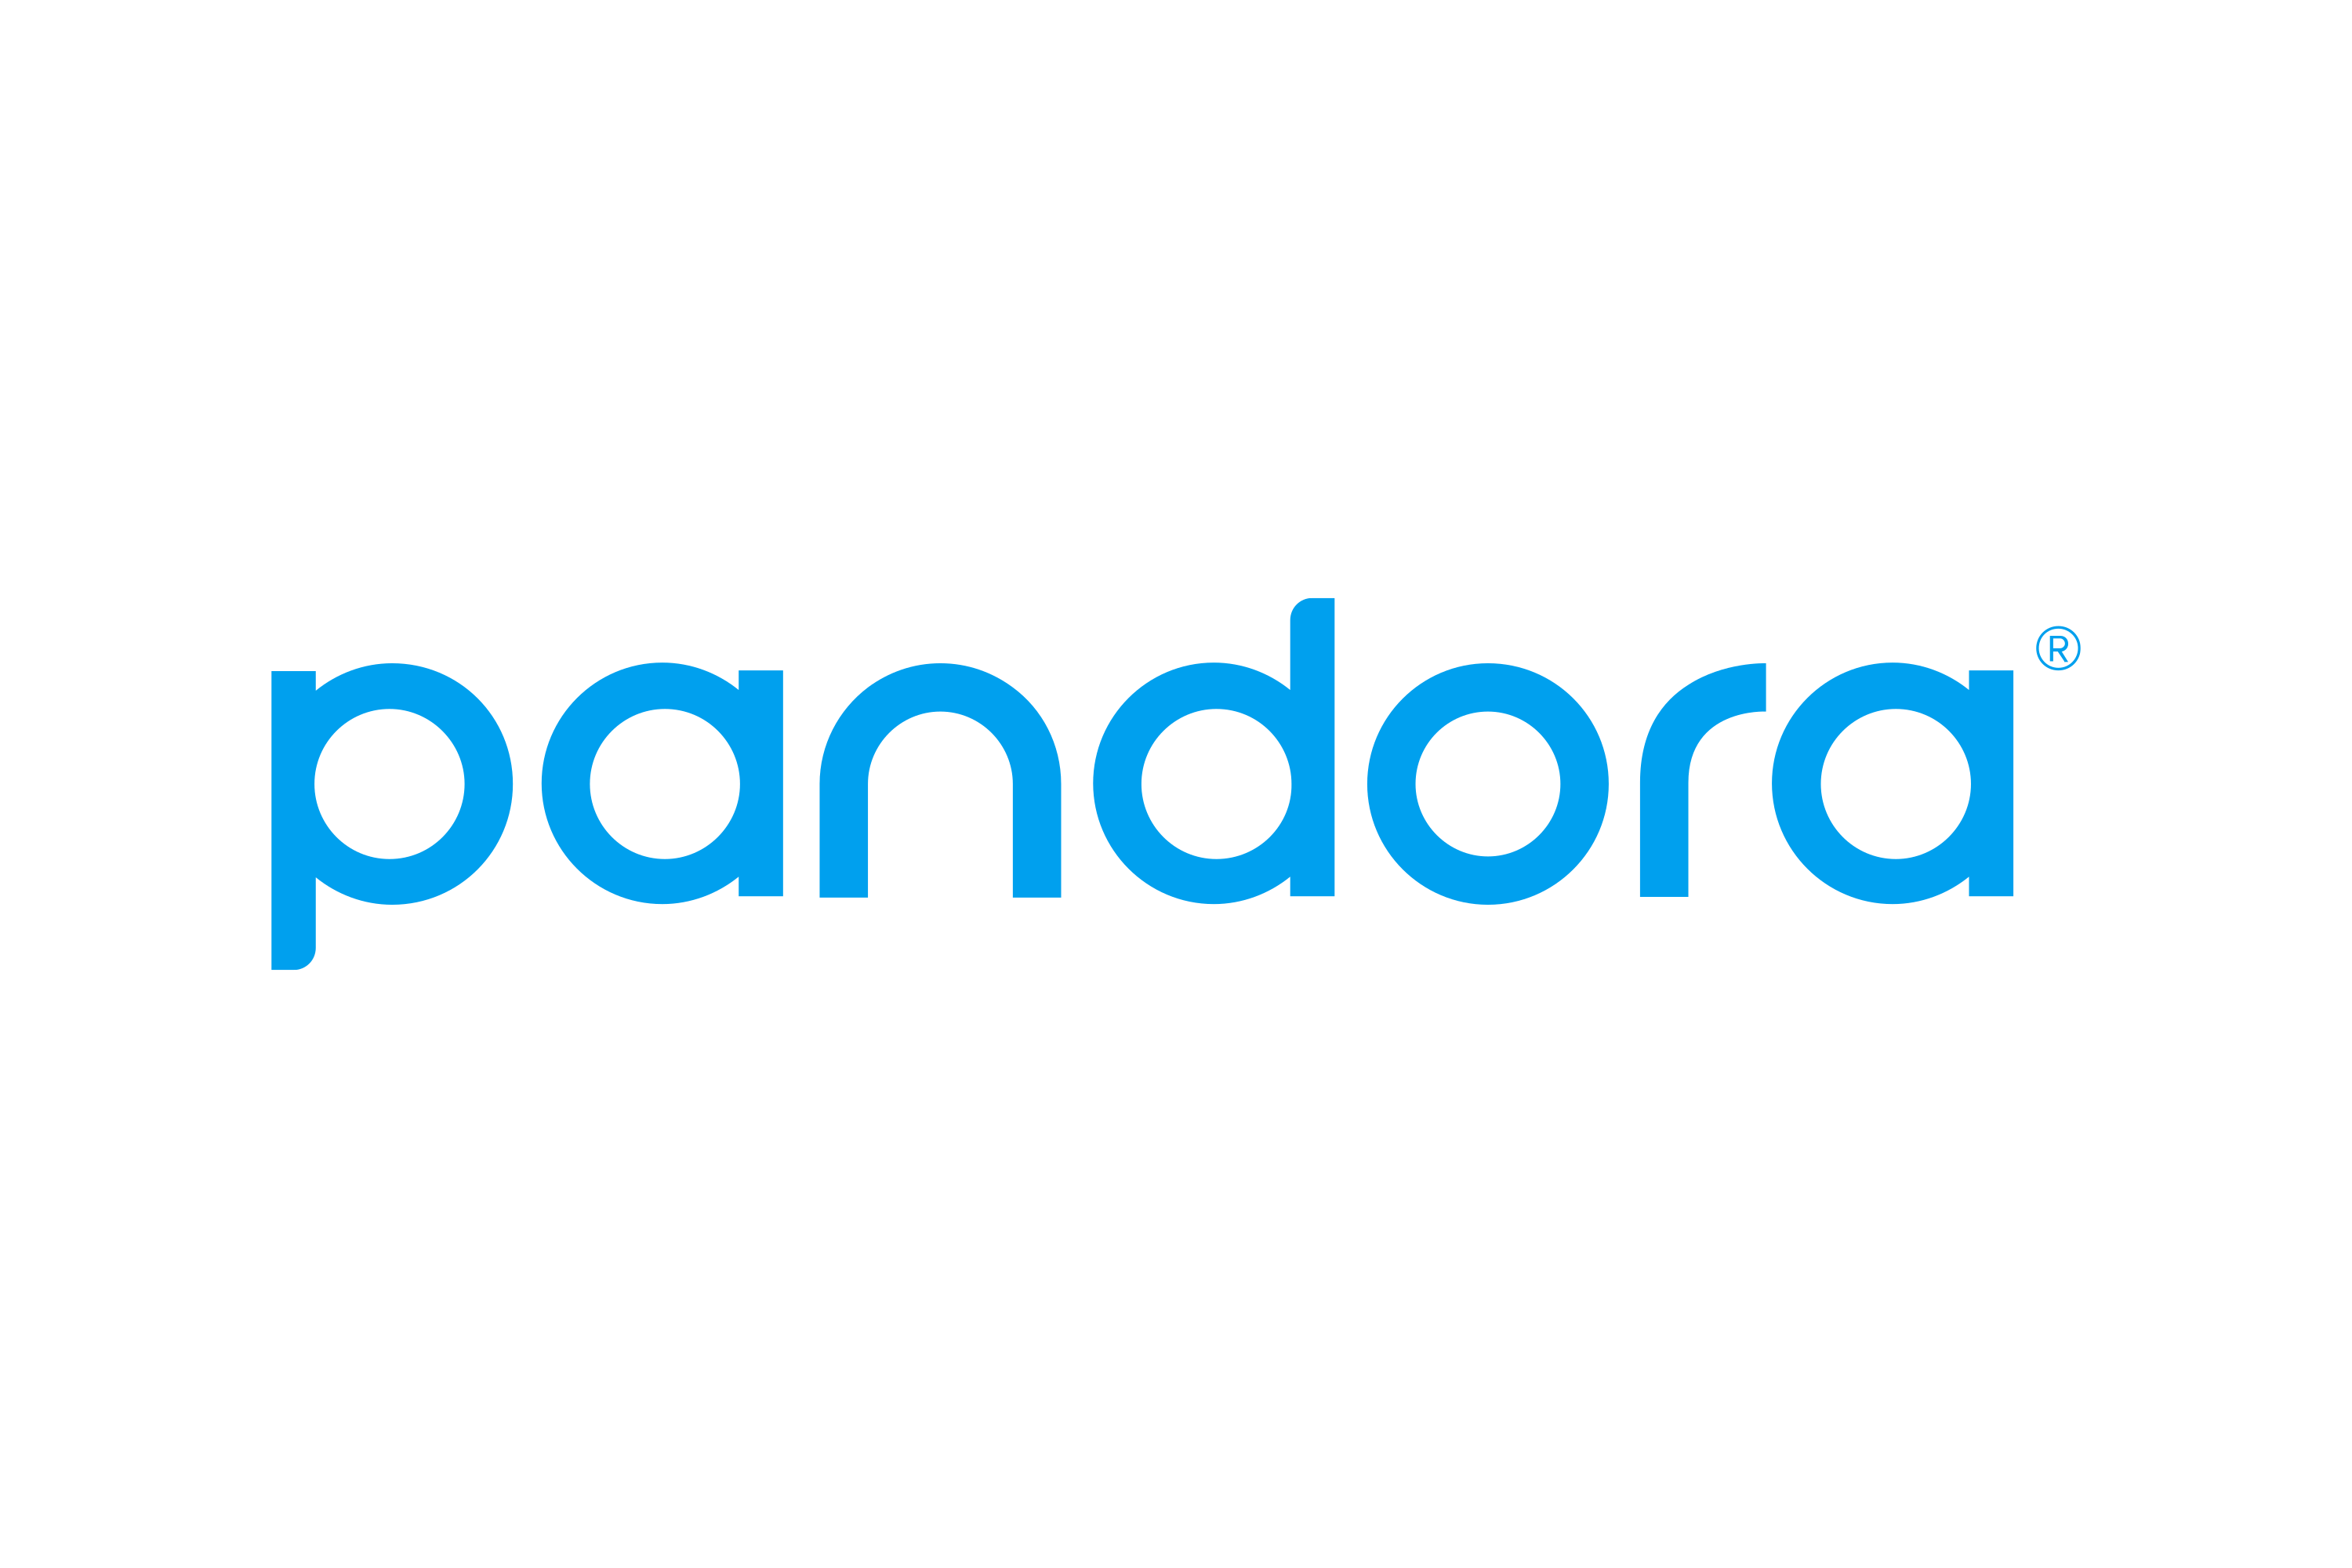 pandora radio free music websites